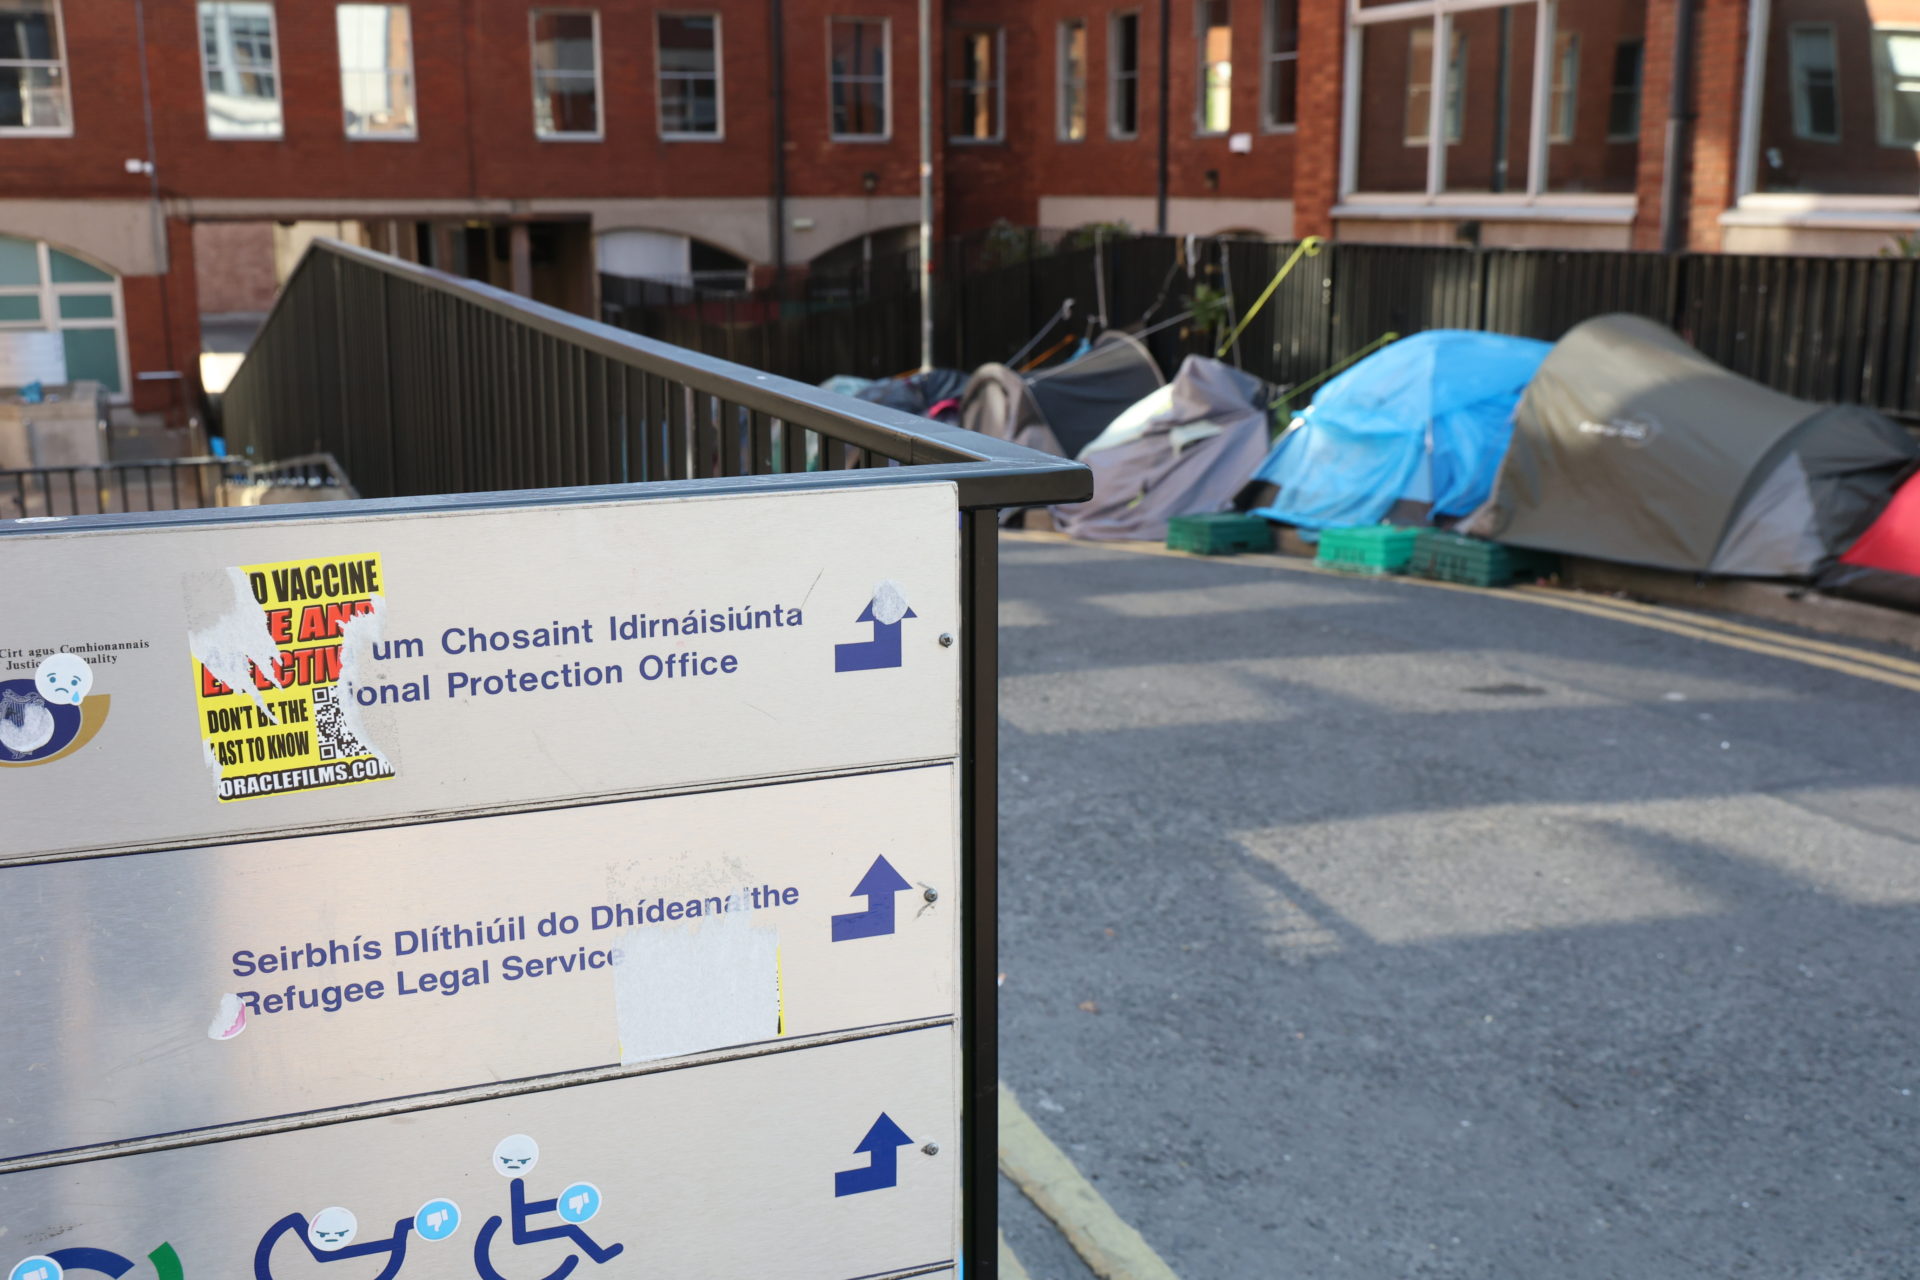 'Fundamentally unsafe' for asylum seekers to sleep rough in Dublin - Irish Refugee Council